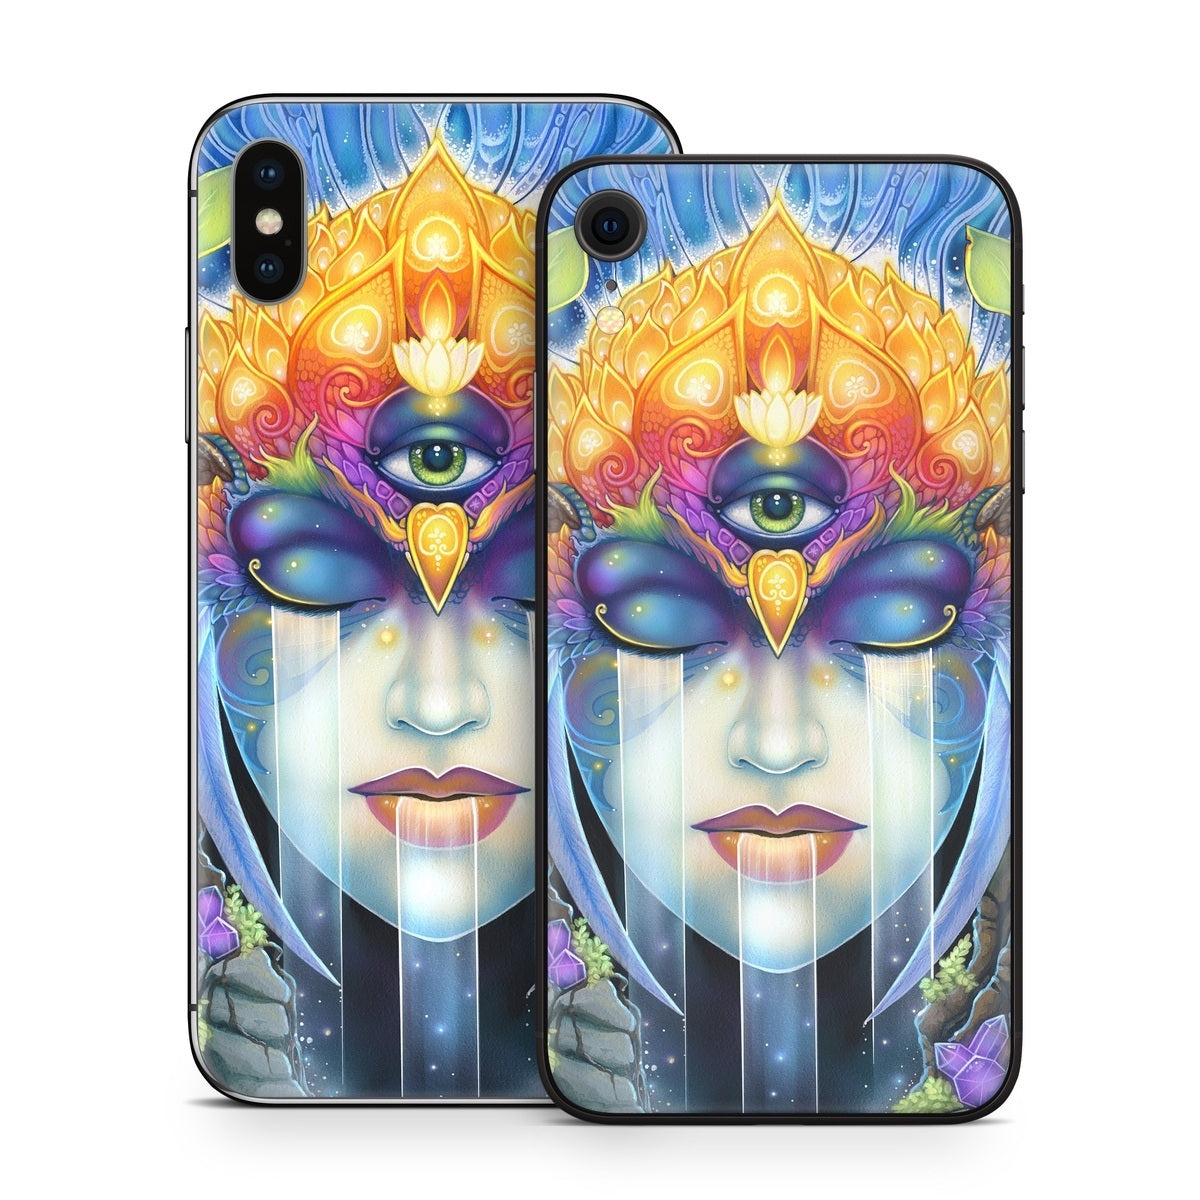 Gaia Goddess - Apple iPhone X Skin